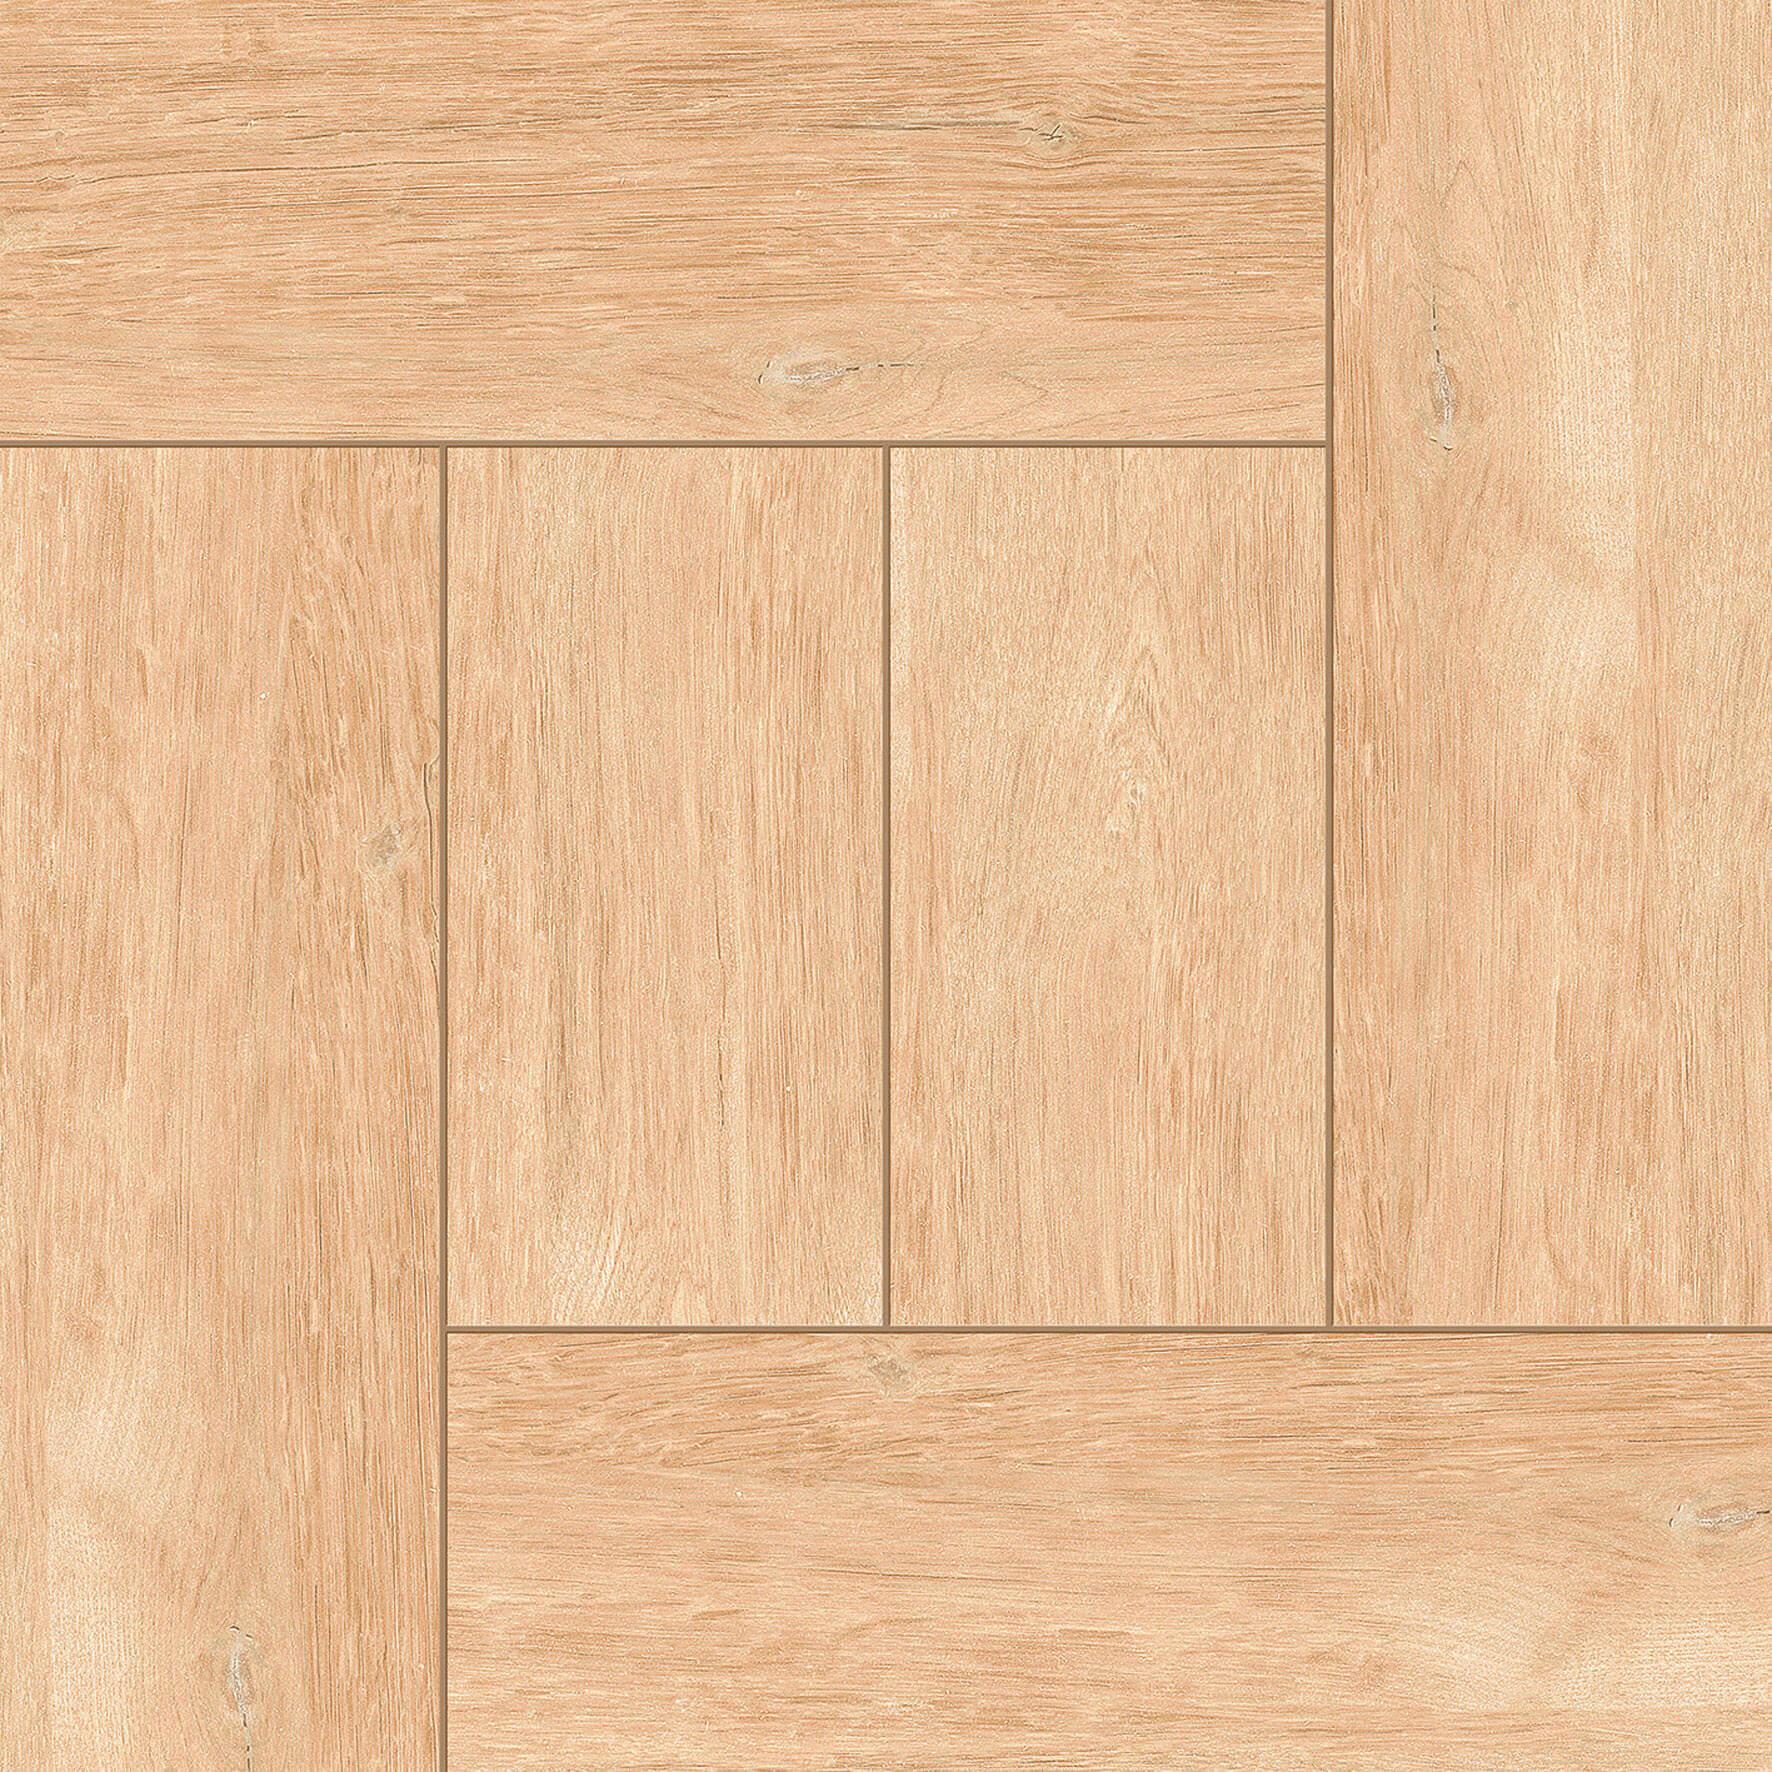 Floor Tiles for Living Room Tiles, Bedroom Tiles, Balcony Tiles, Accent Tiles, Terrace Tiles, Hospital Tiles, Automotive Tiles, High Traffic Tiles, Bar/Restaurant, Commercial/Office, Outdoor/Terrace